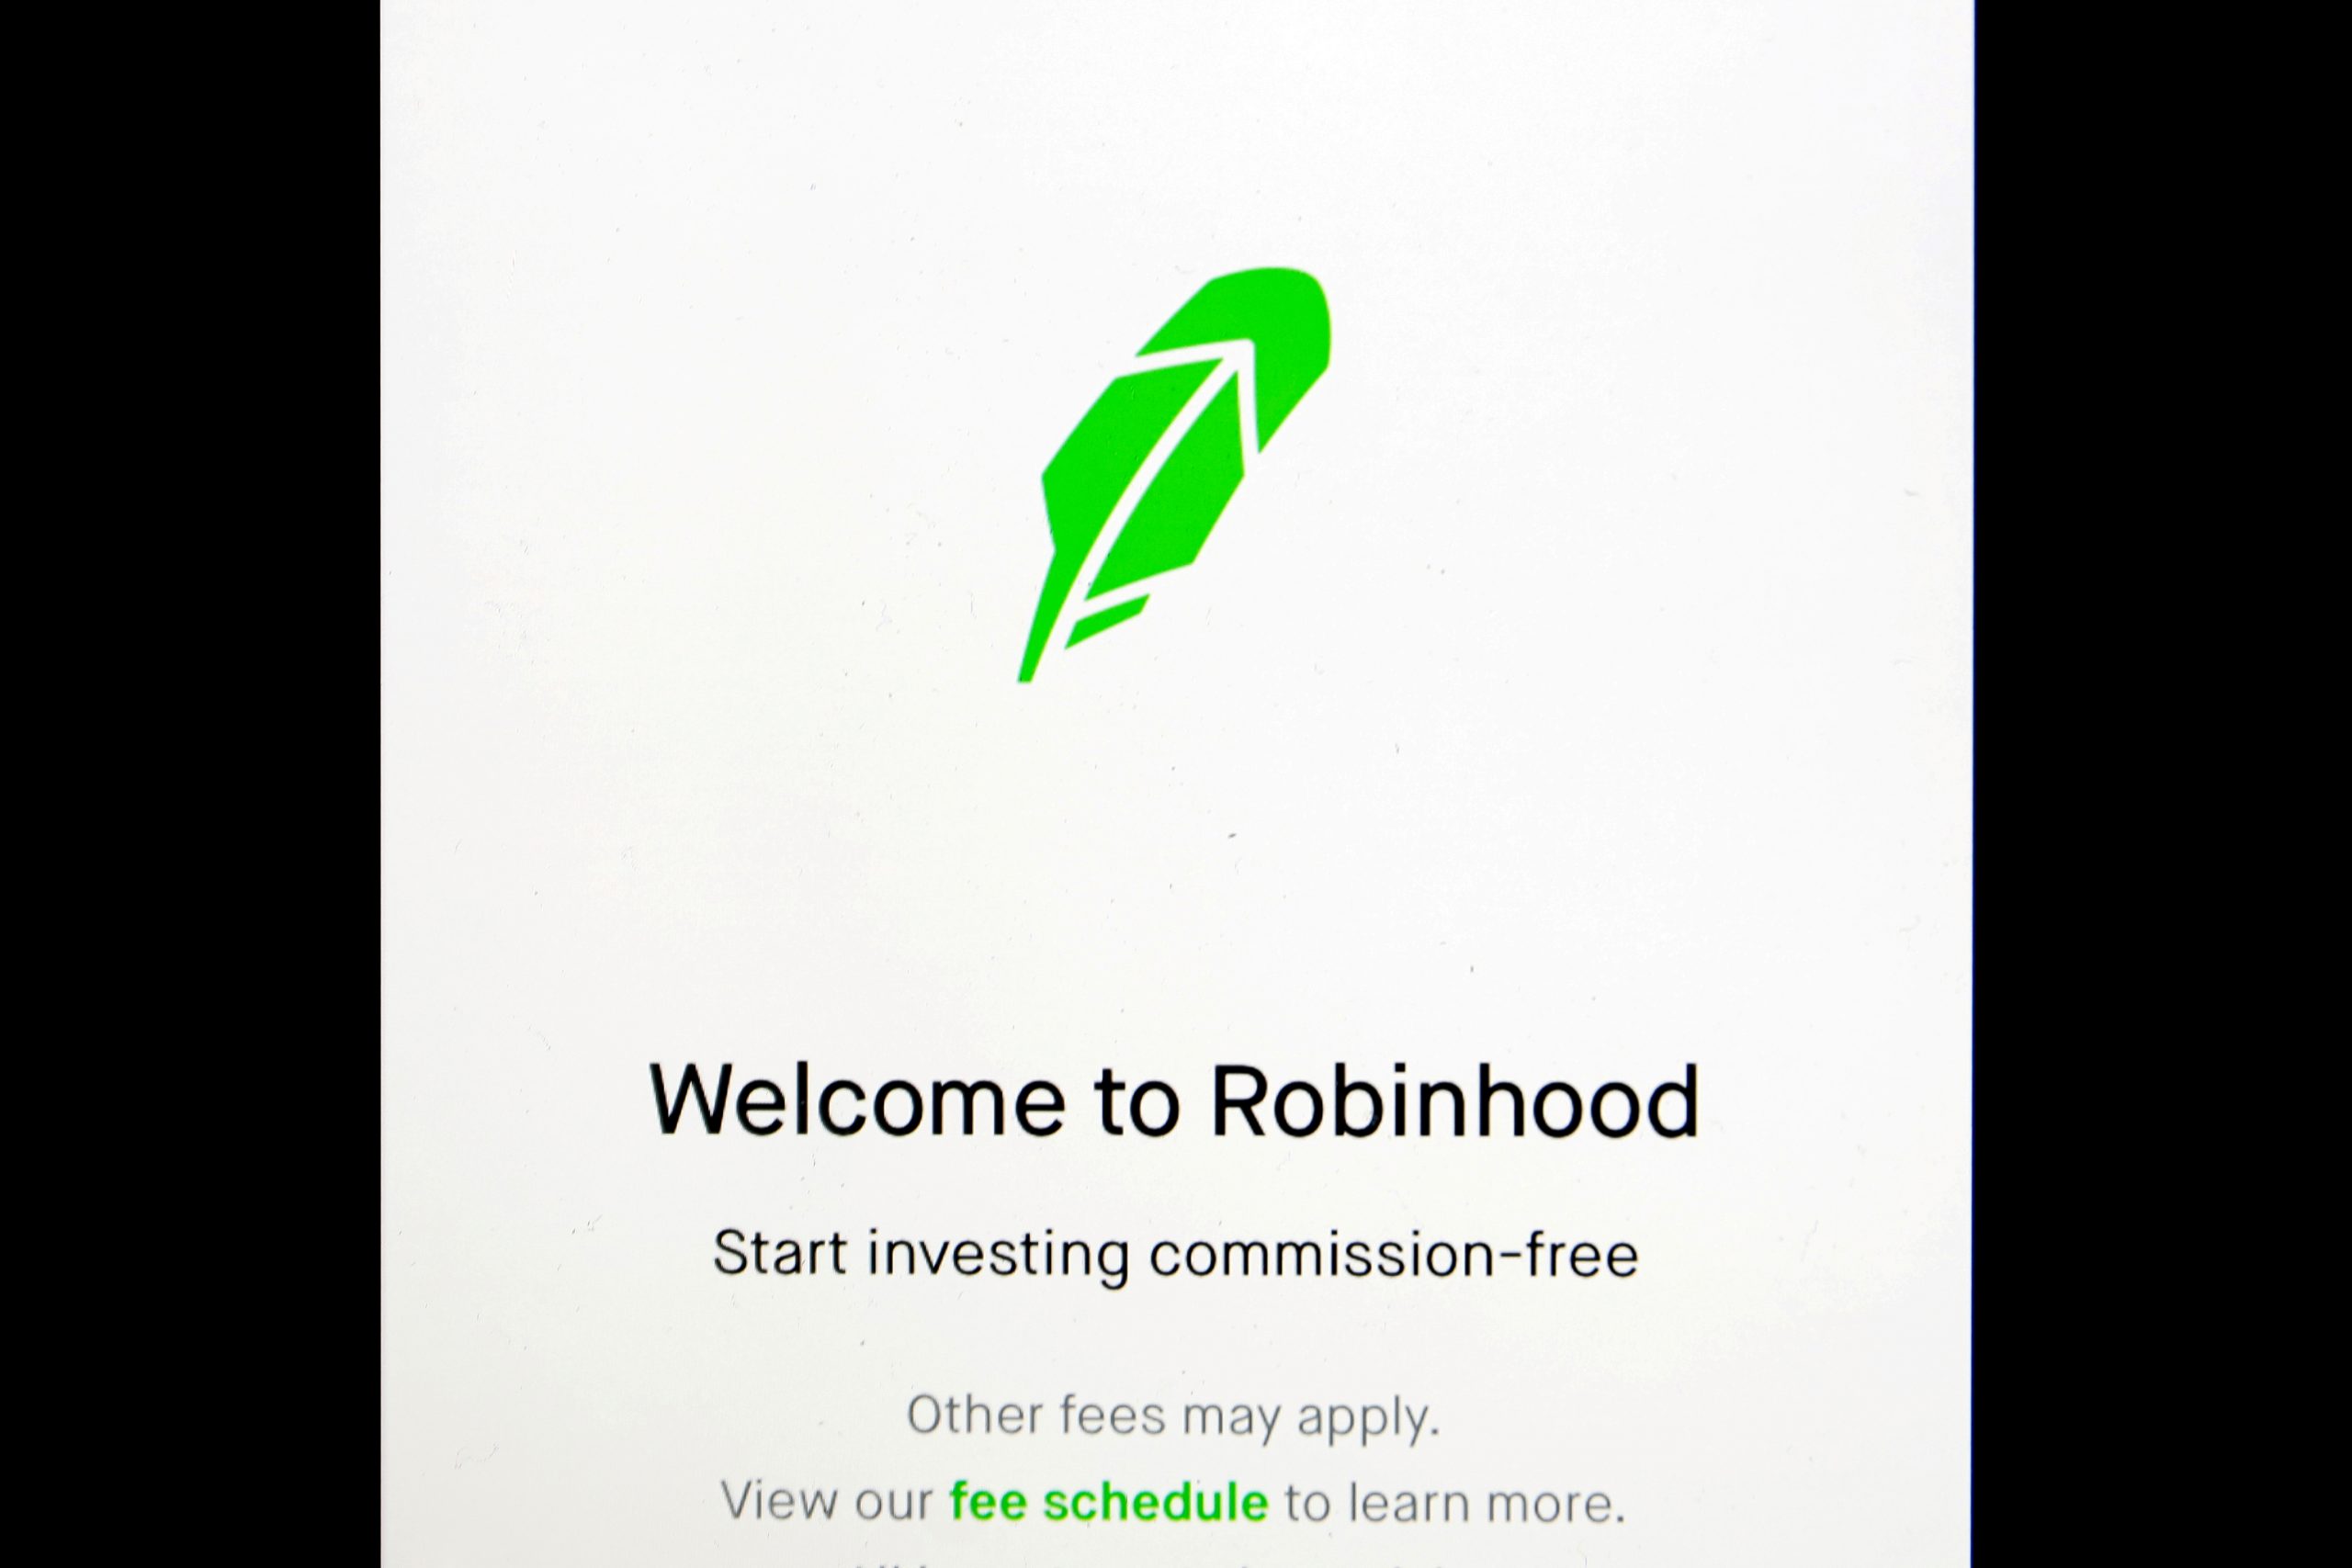  Robinhood reveals breakneck growth, legal pitfalls in IPO filing